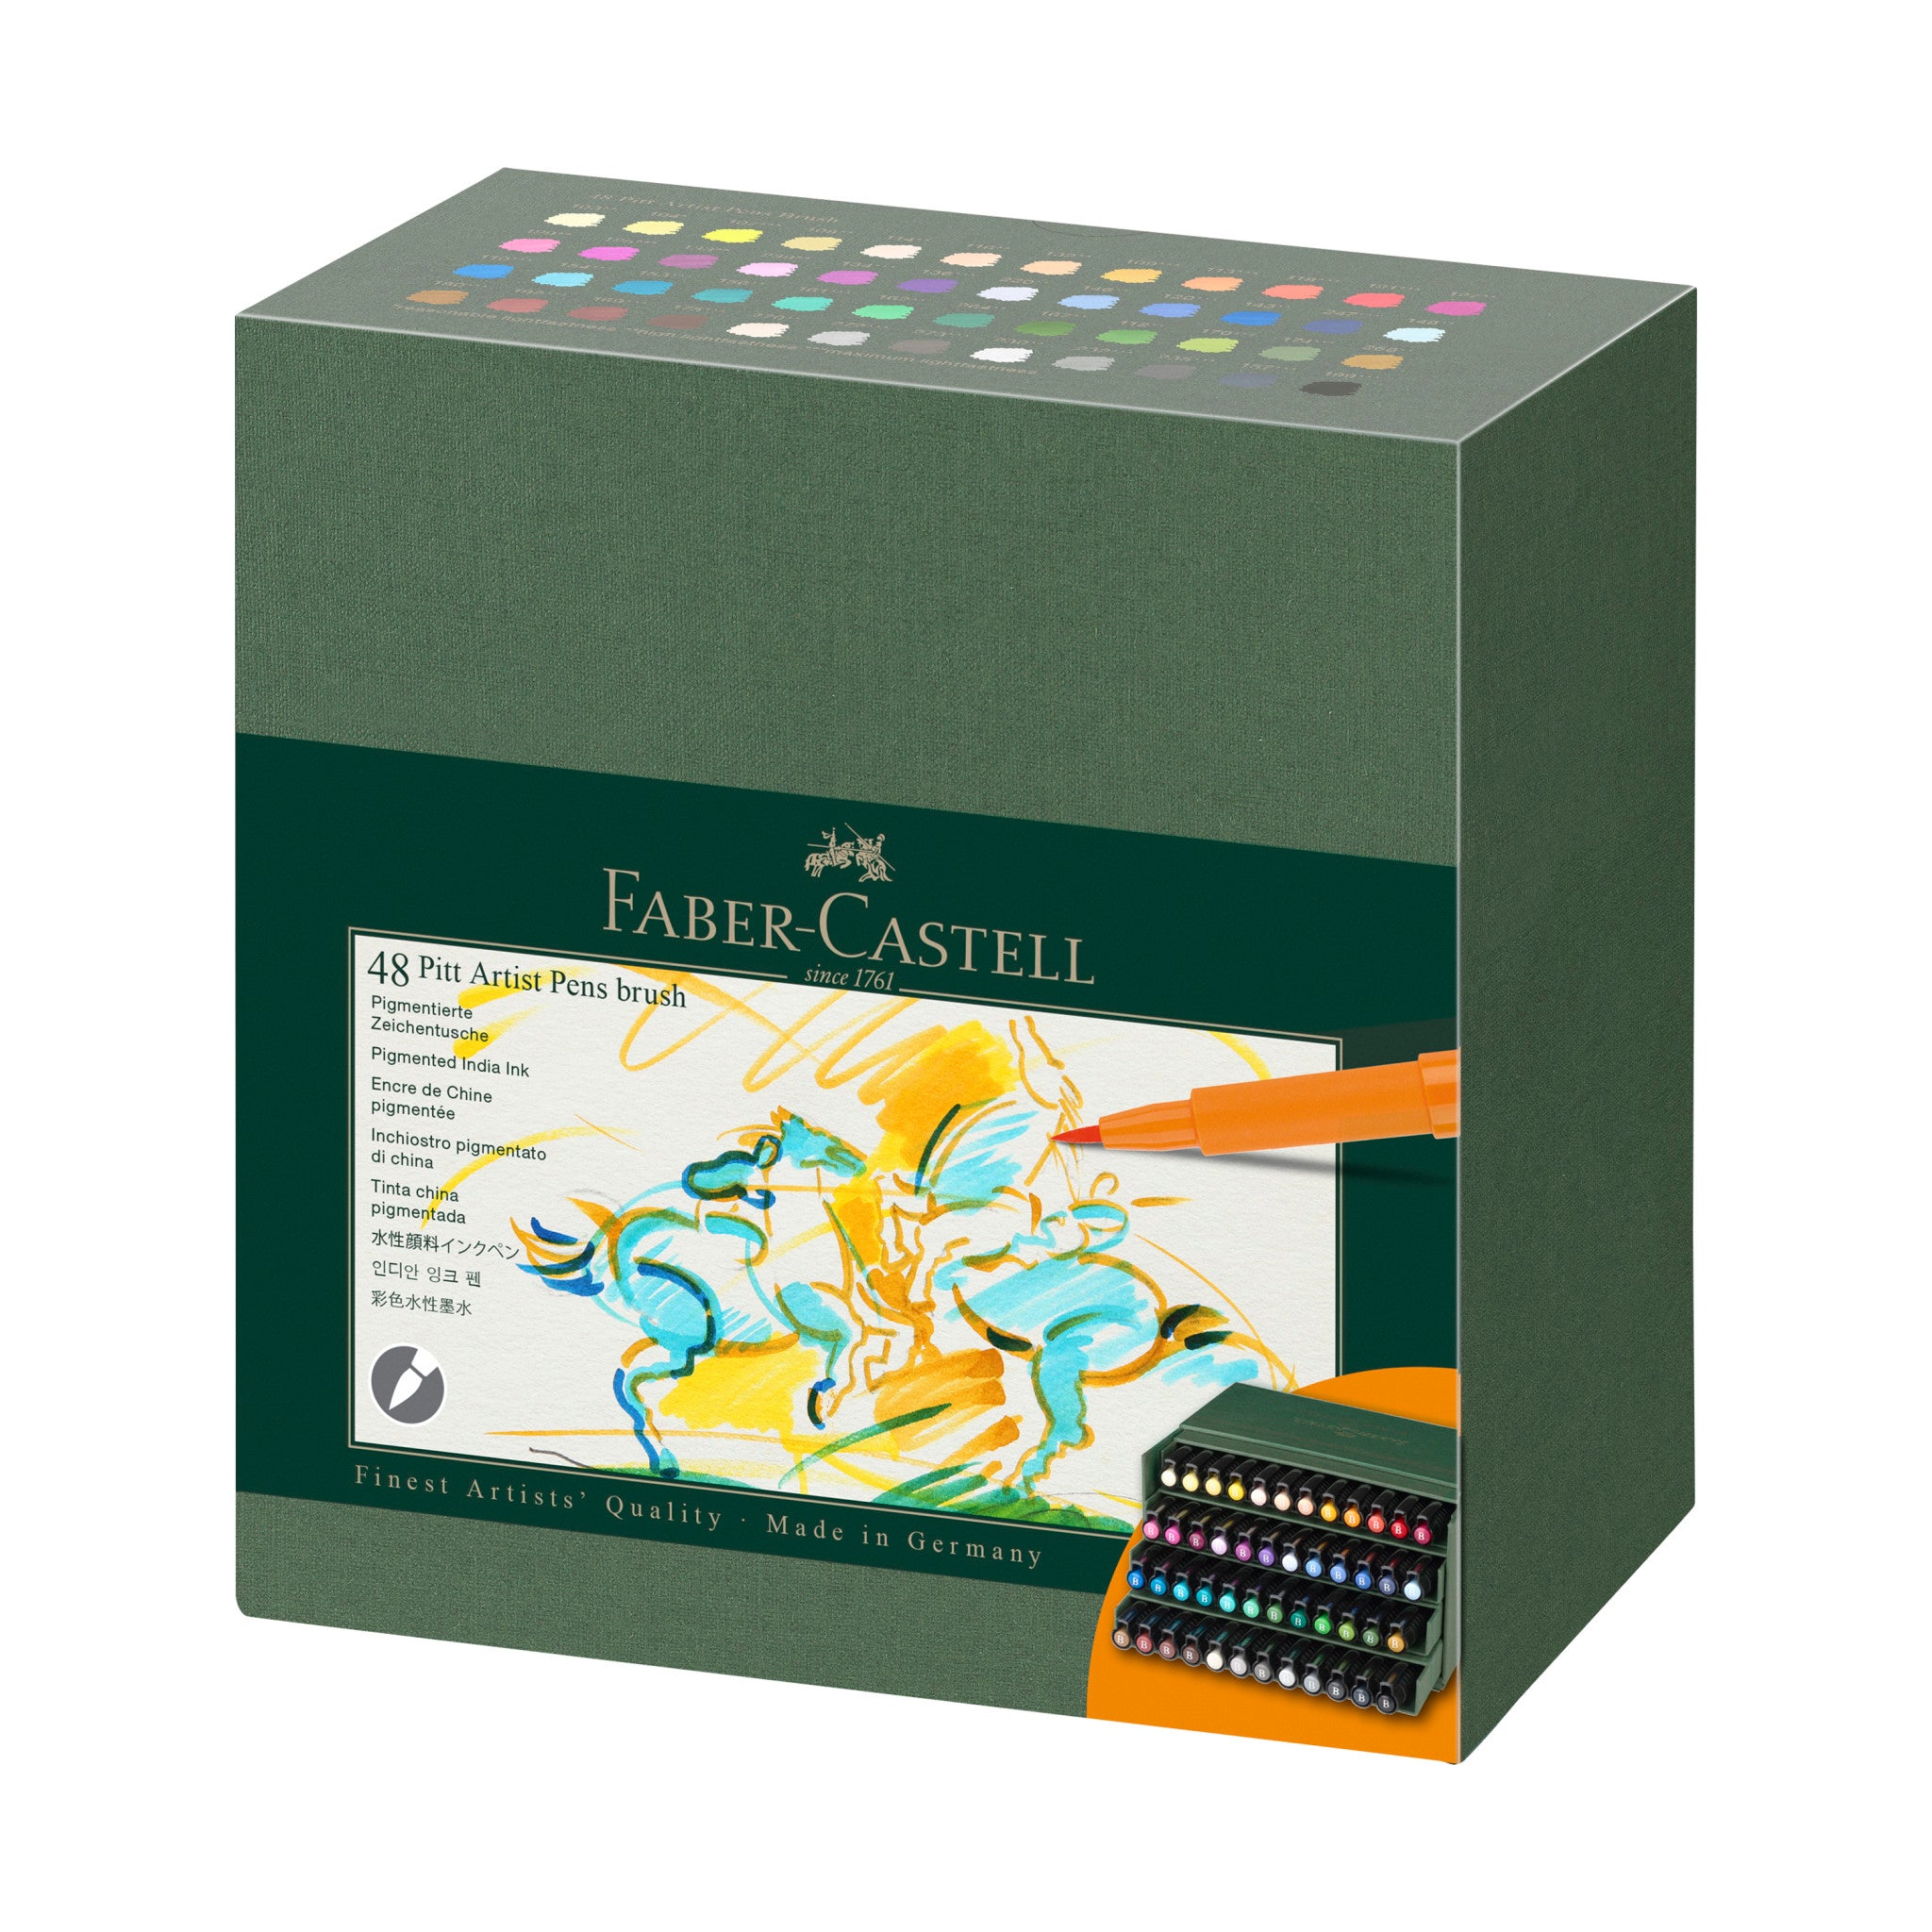  Faber-Castell Pitt Pastel Pencil - Sepia #175